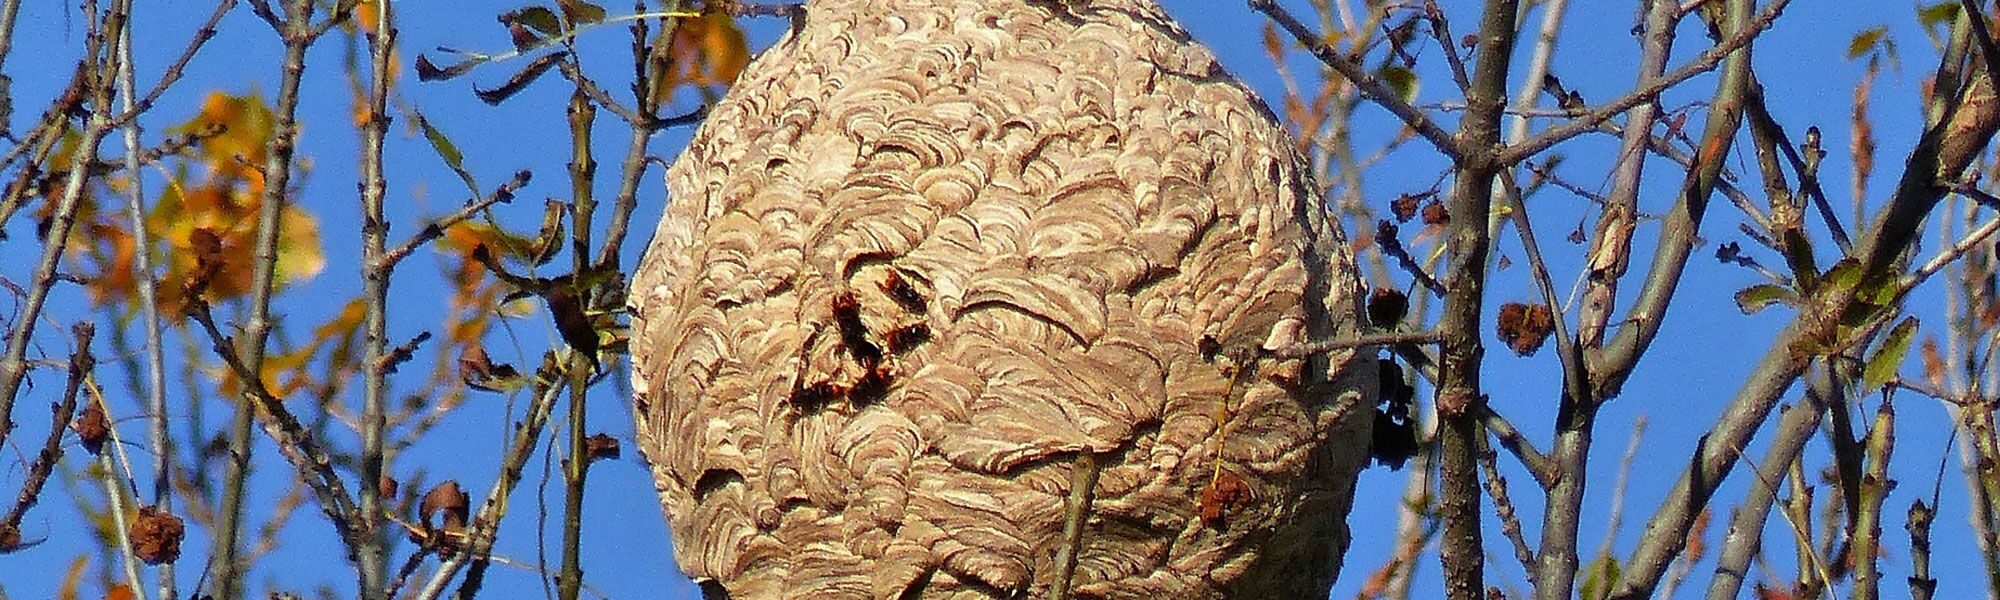 nide de frelons asiatiques